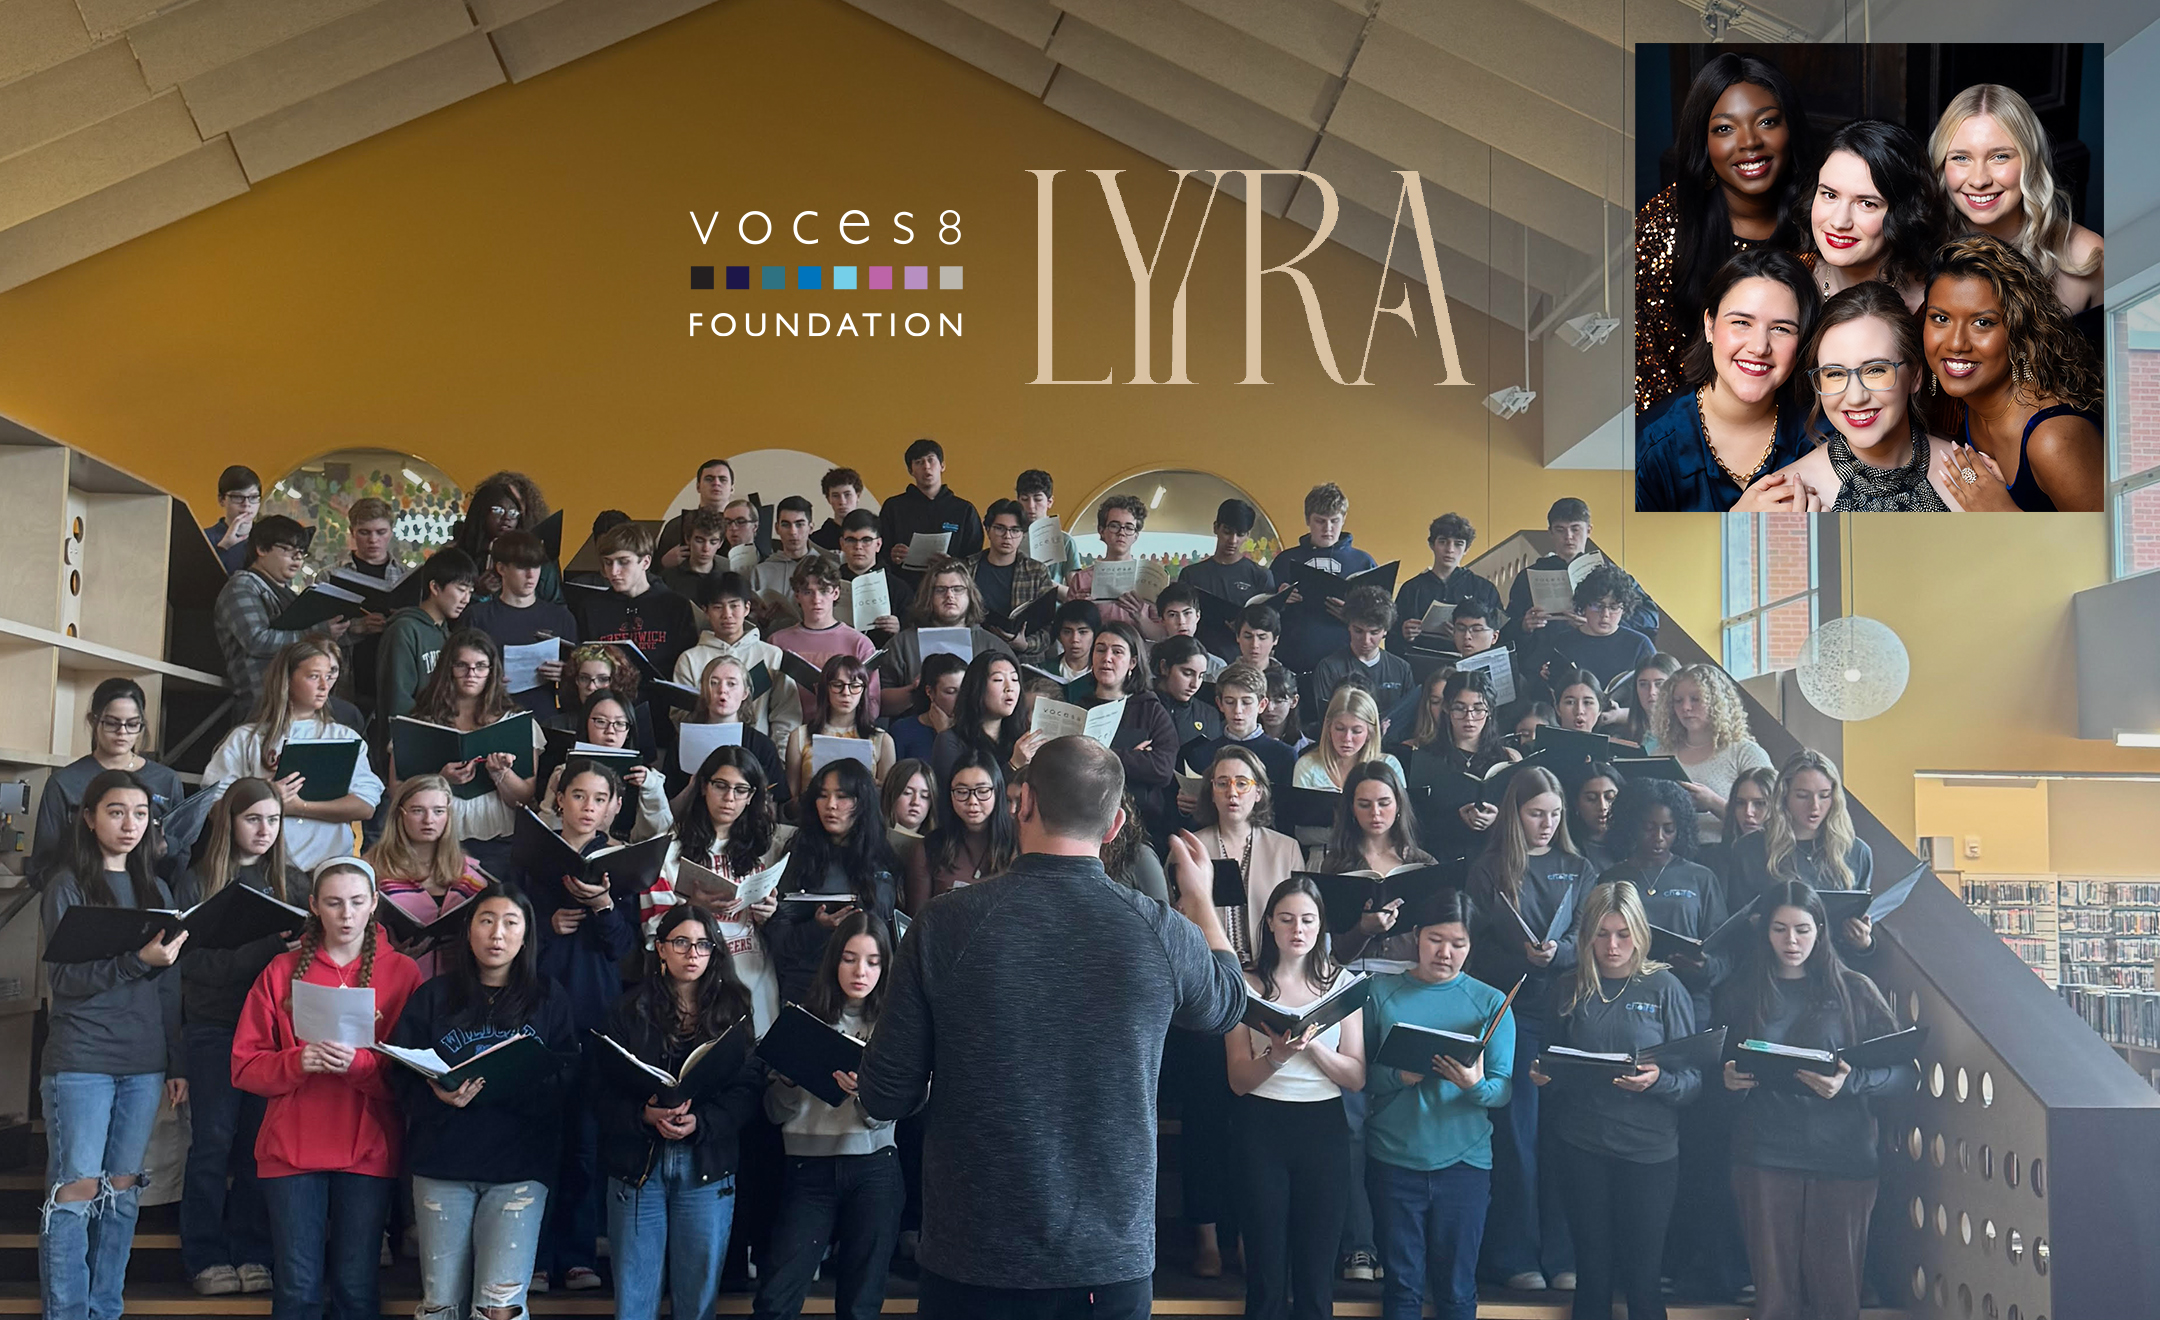 Voces8 Foundation with LYYRA